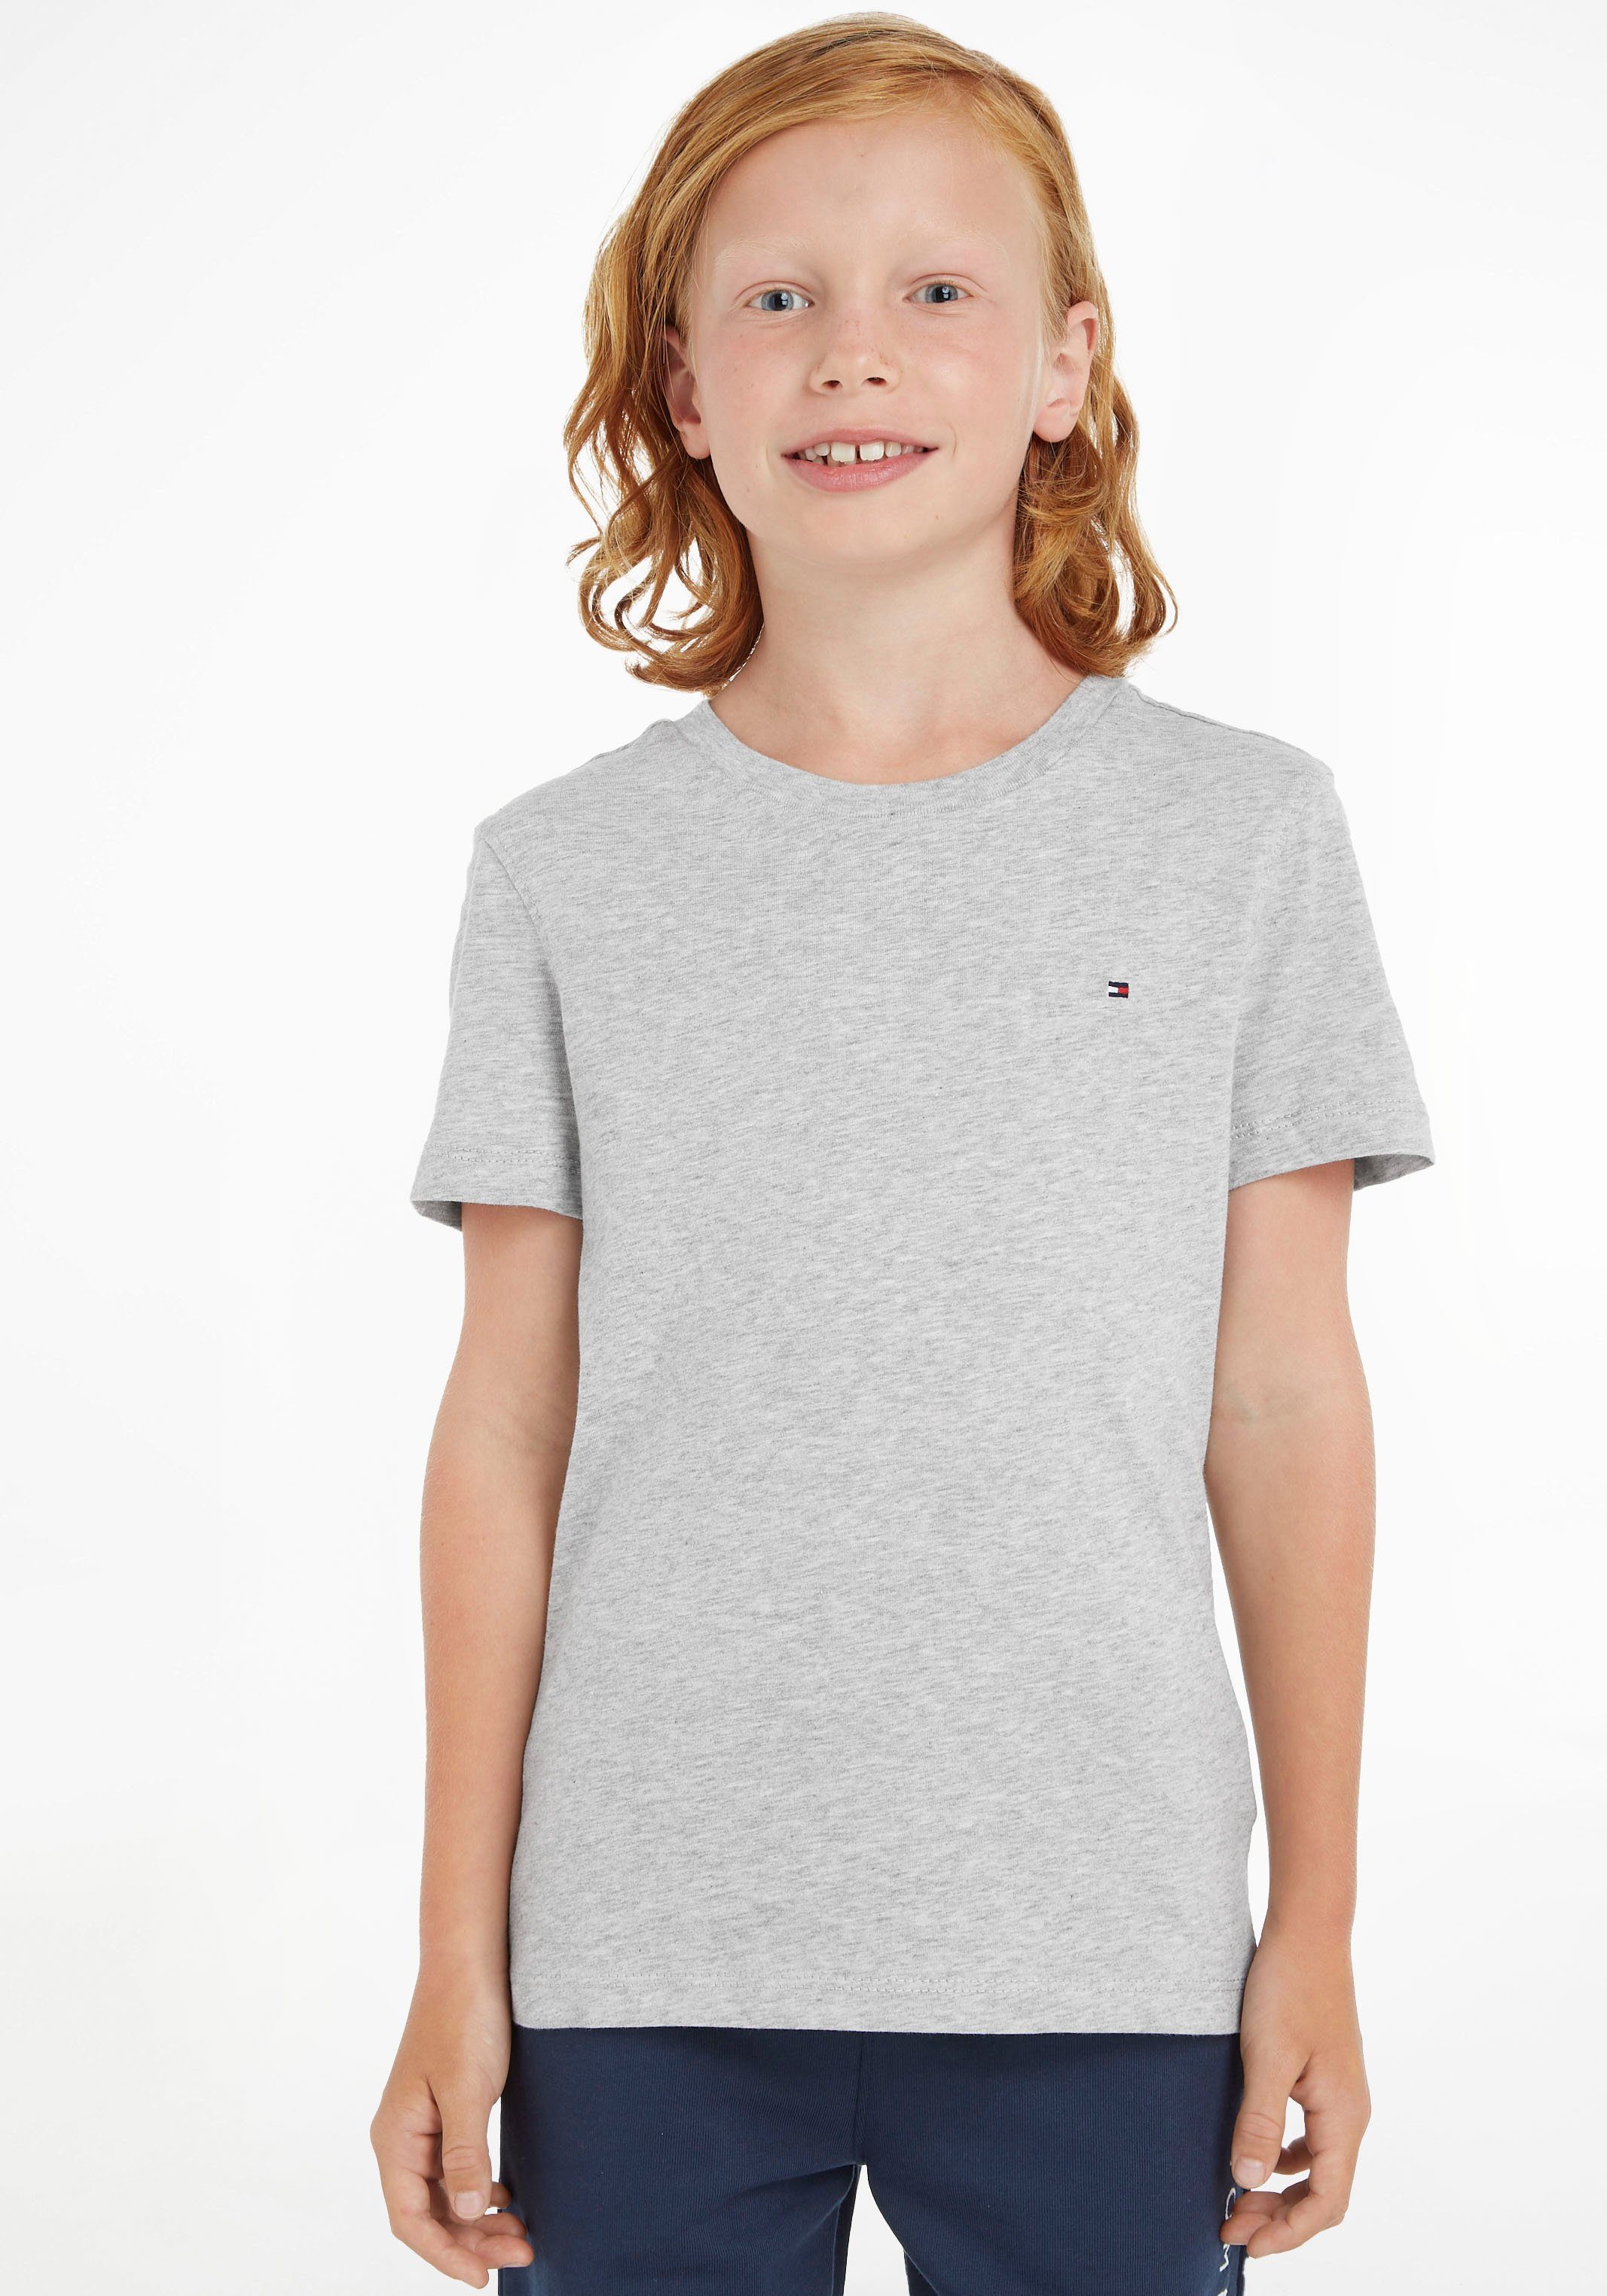 Kids CN Tommy T-Shirt Hilfiger MiniMe Kinder KNIT BASIC BOYS Junior